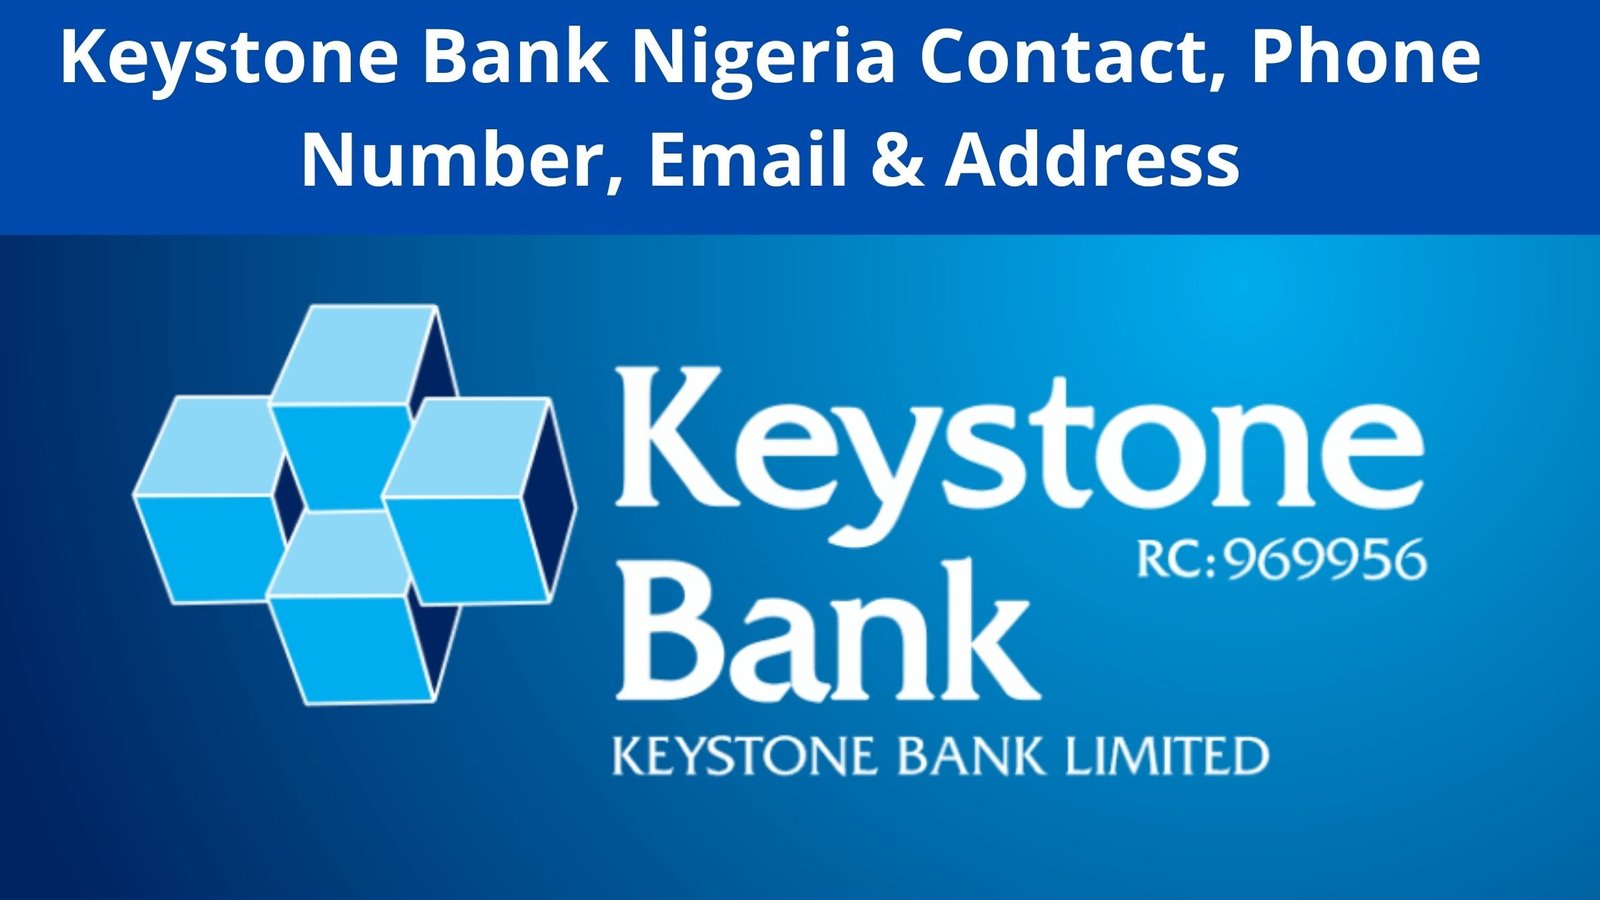 Keystone Bank Nigeria Contact